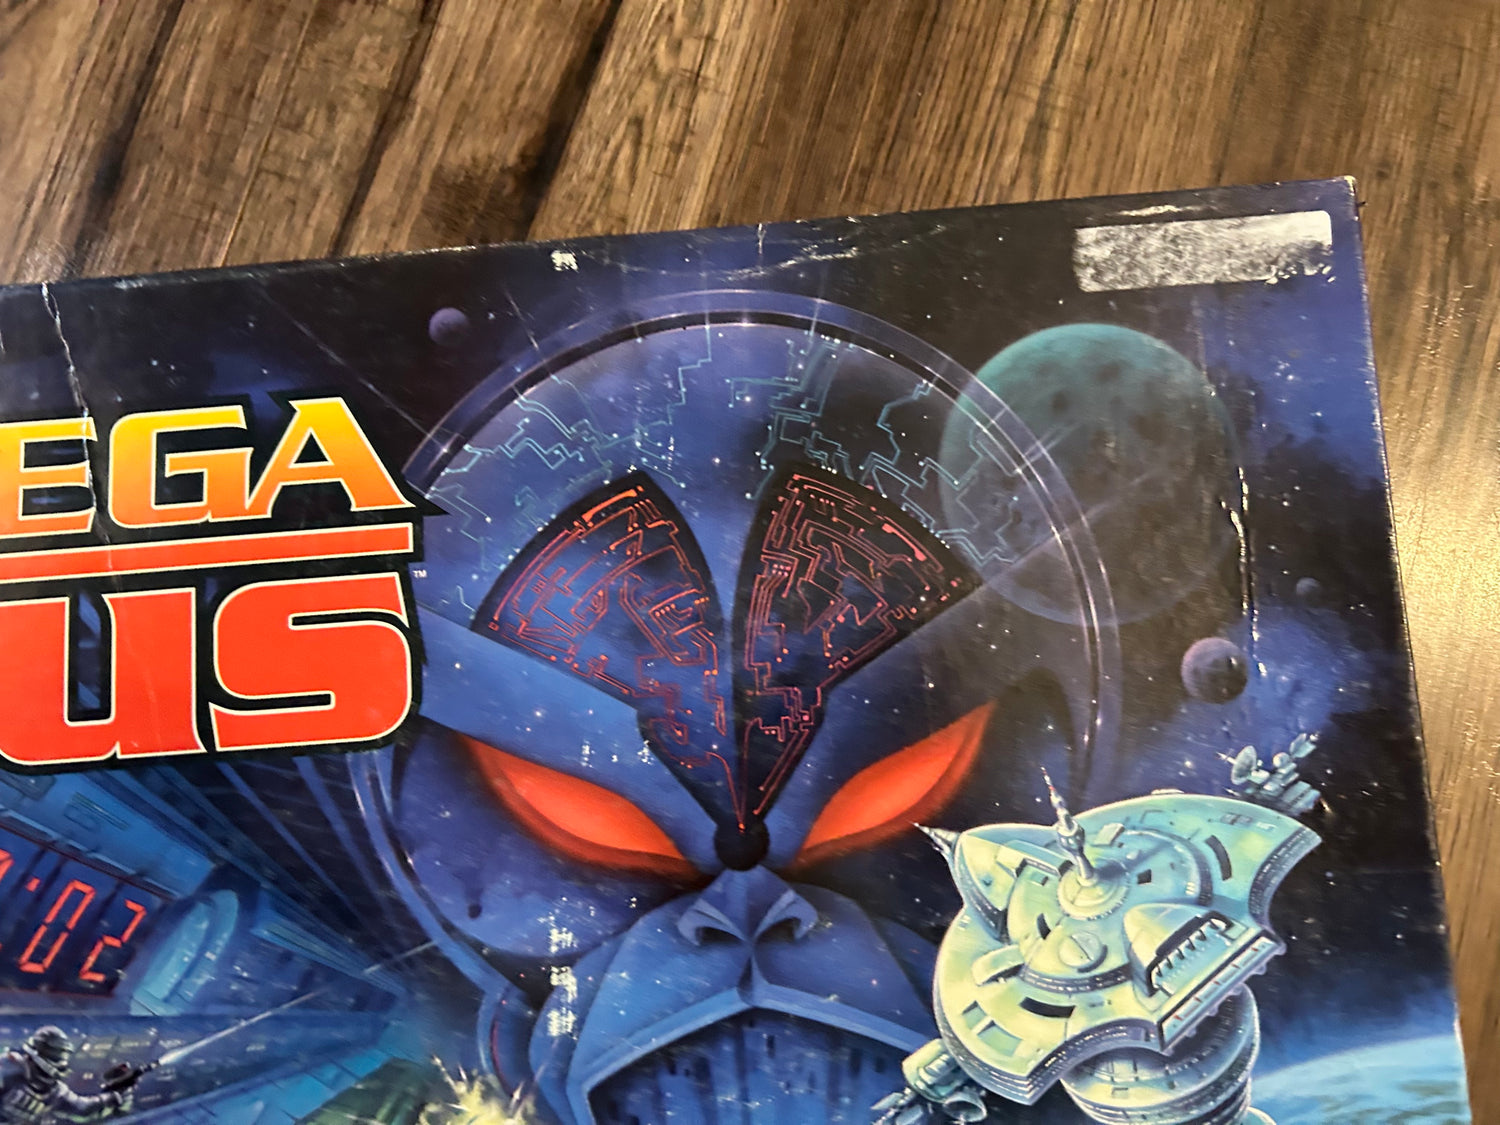 The Omega Virus Talking Electronic Board Game - READ